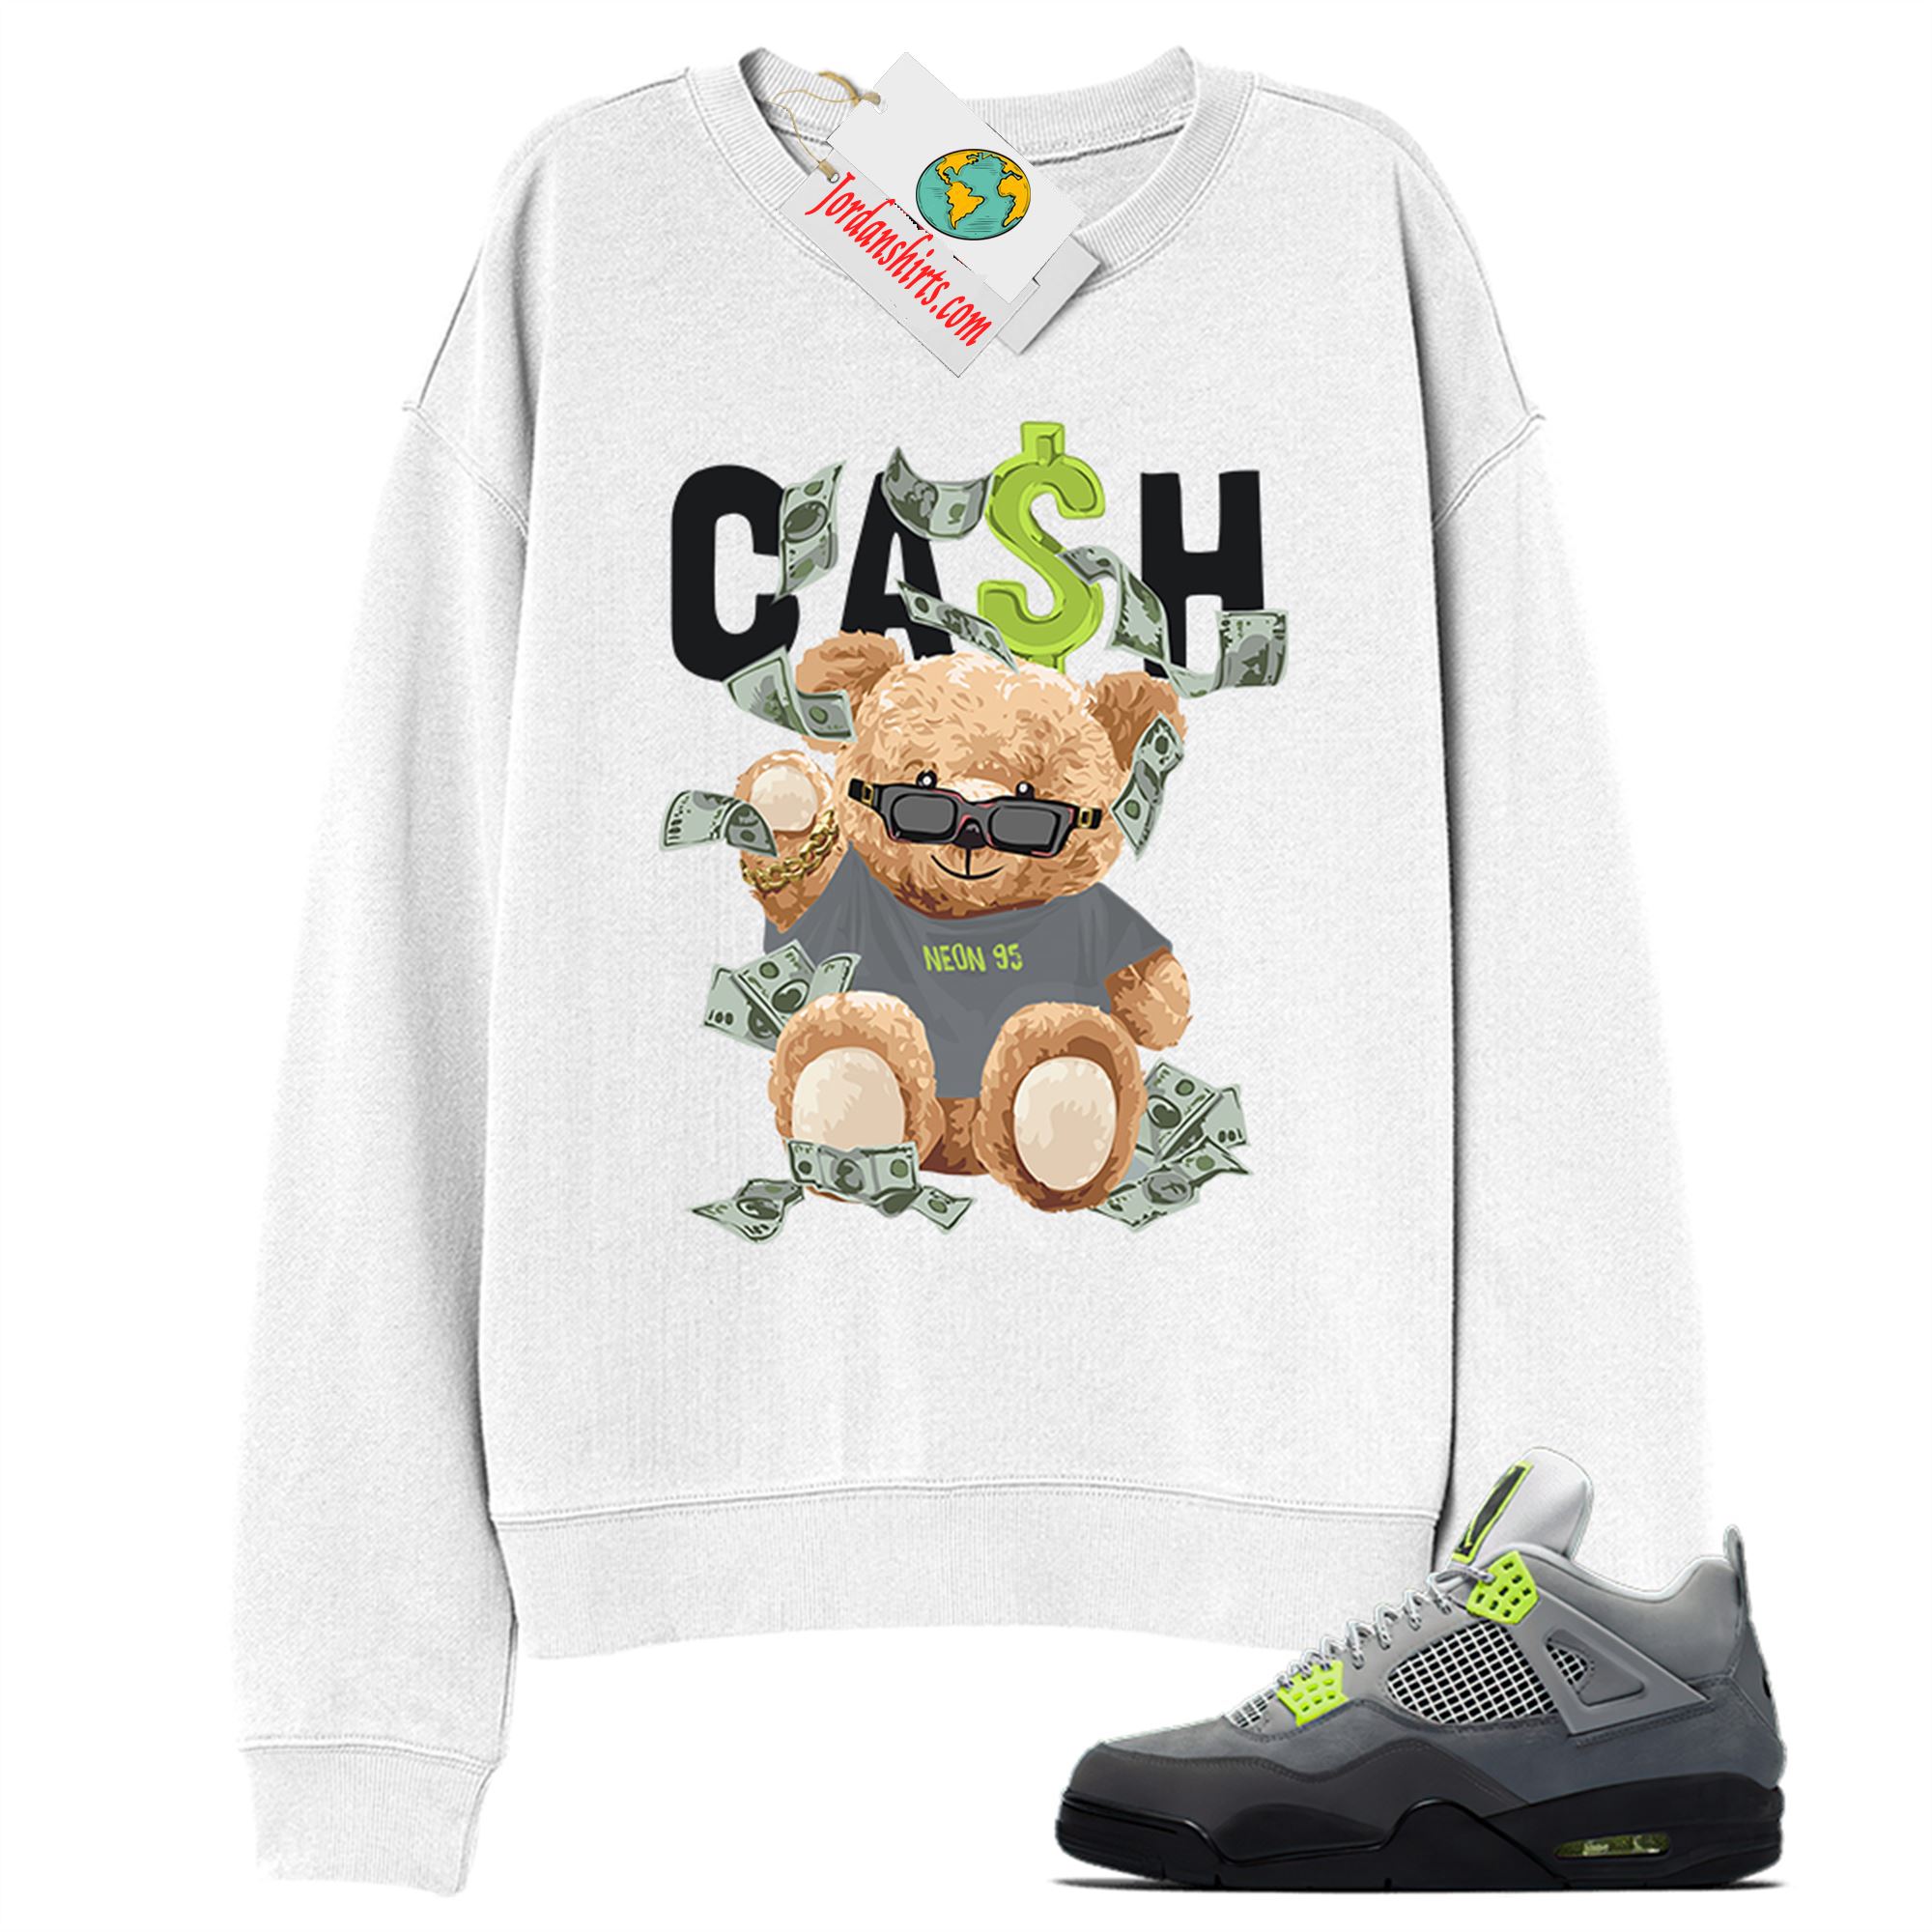 Jordan 4 Sweatshirt, Cash Teddy Bear In Sunglasses White Sweatshirt Air Jordan 4 Neon 95 4s Size Up To 5xl